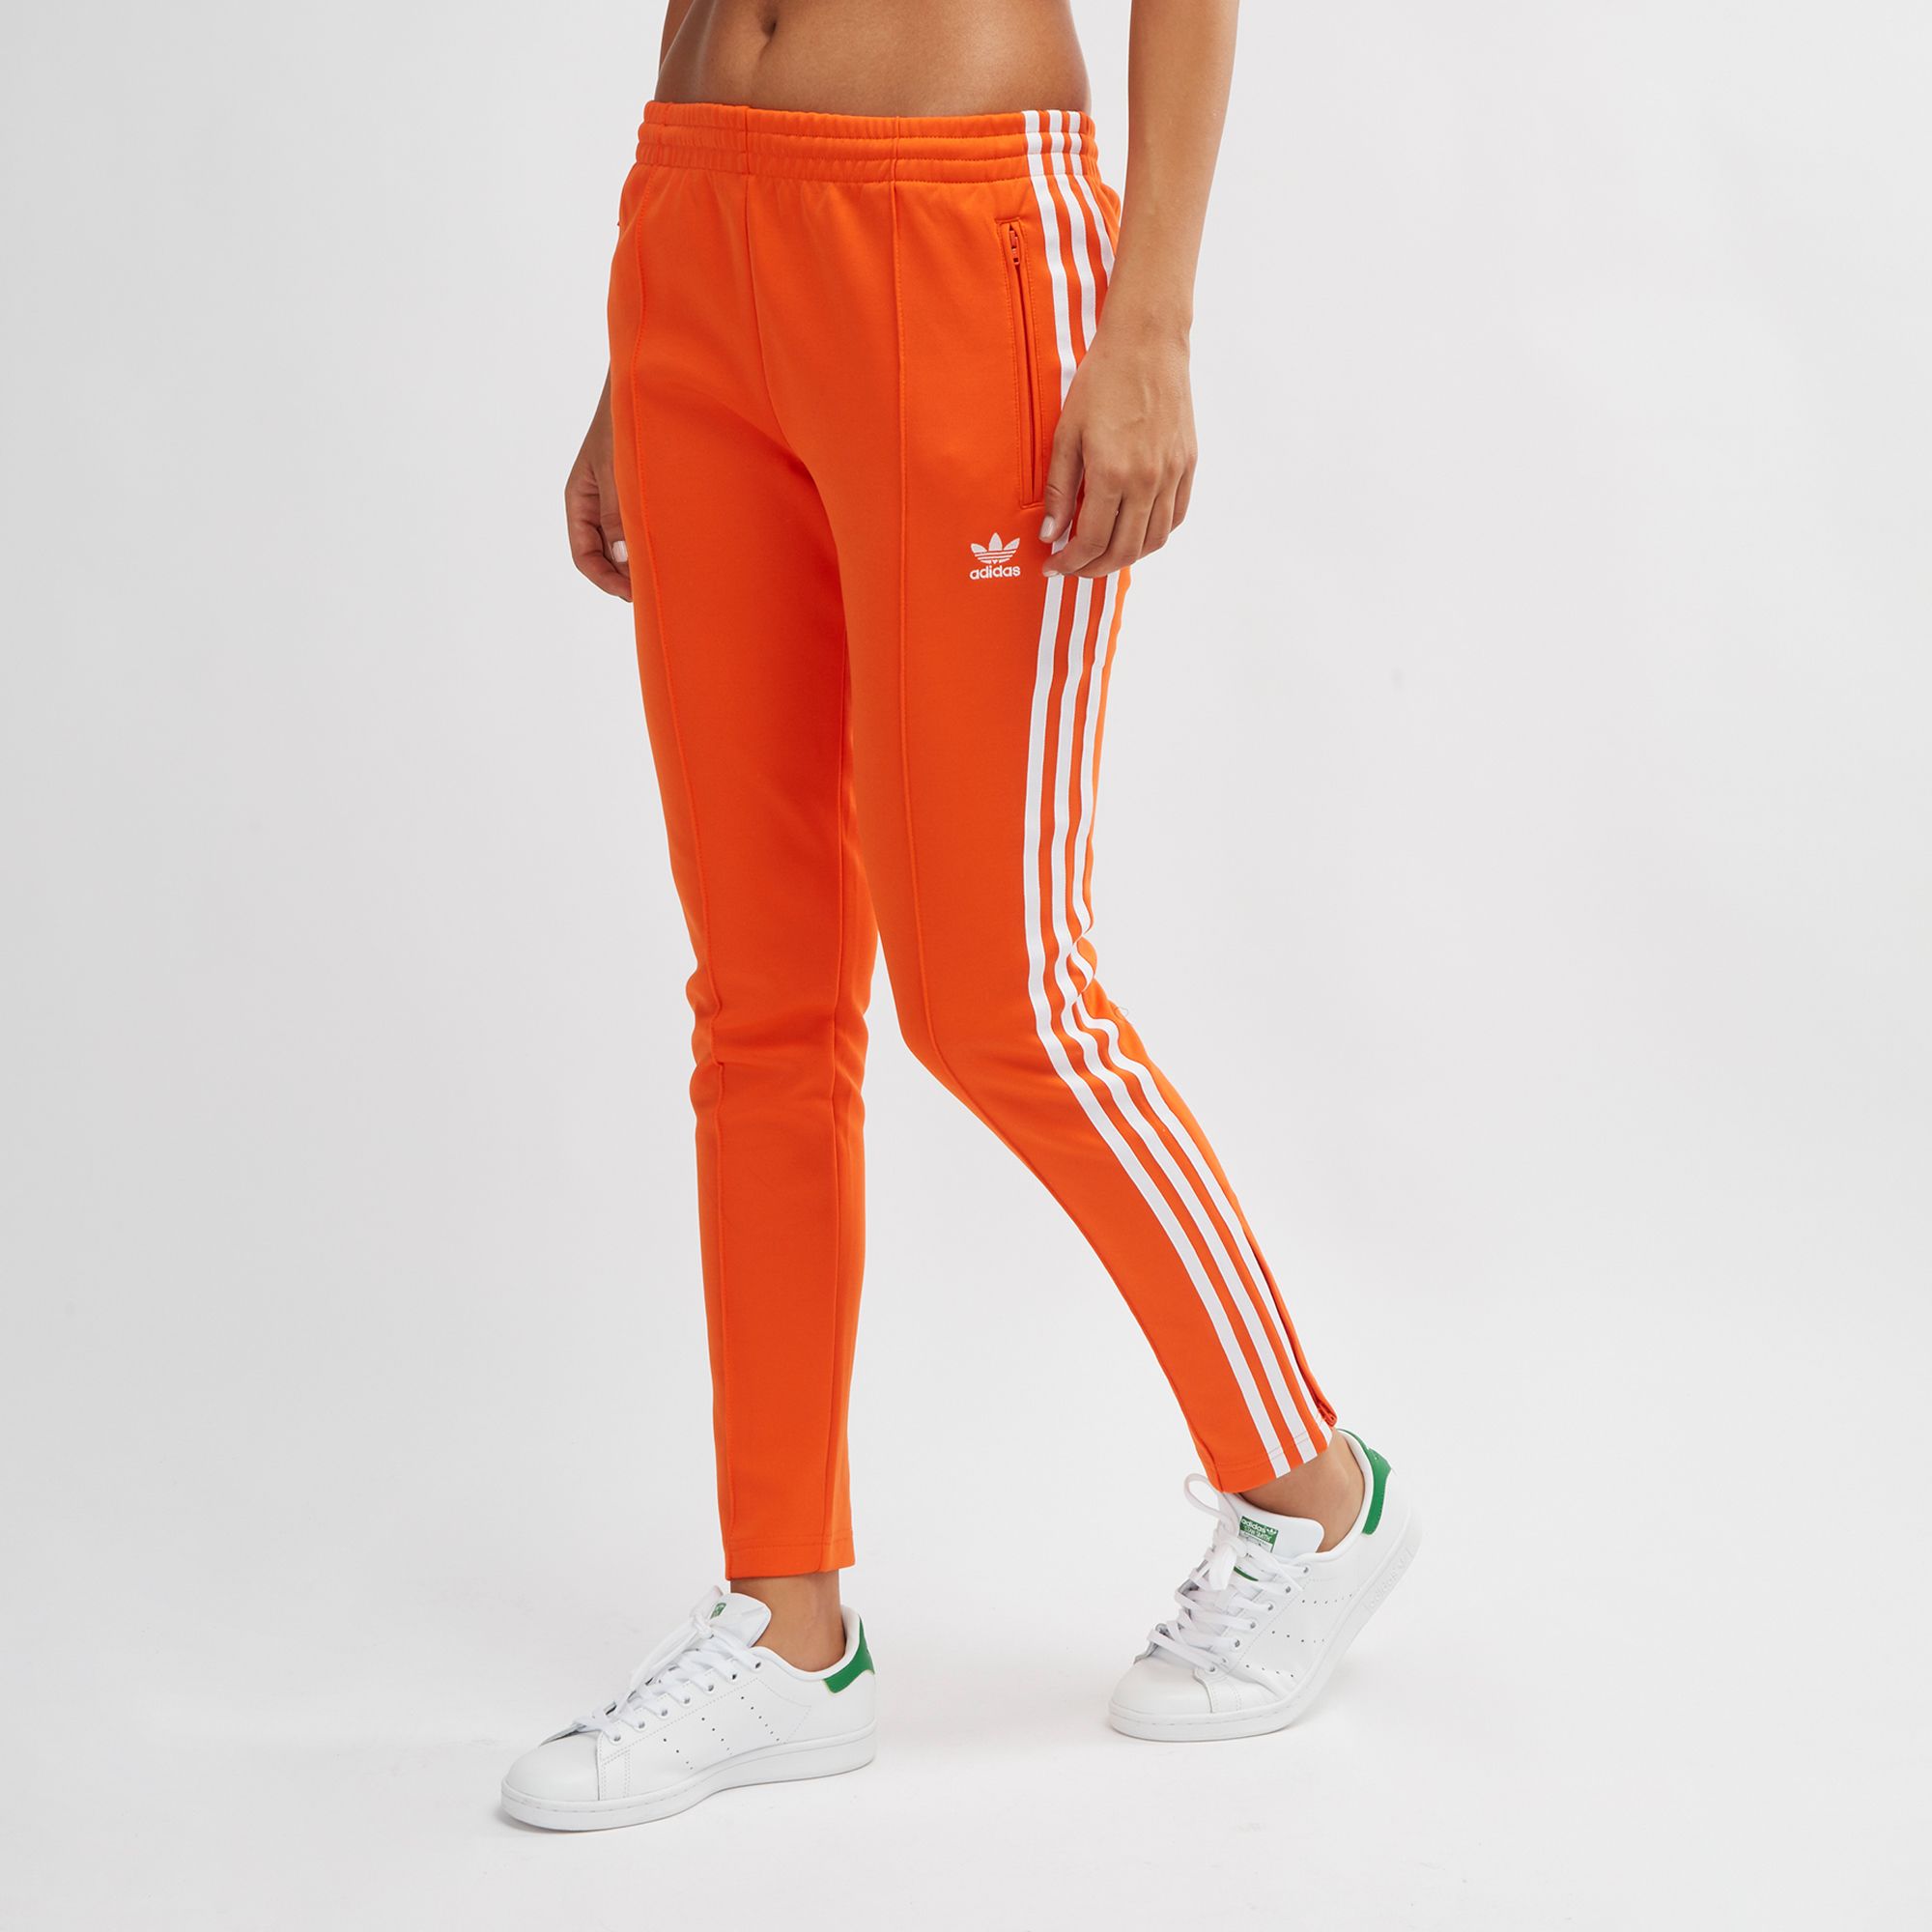 adidas women orange